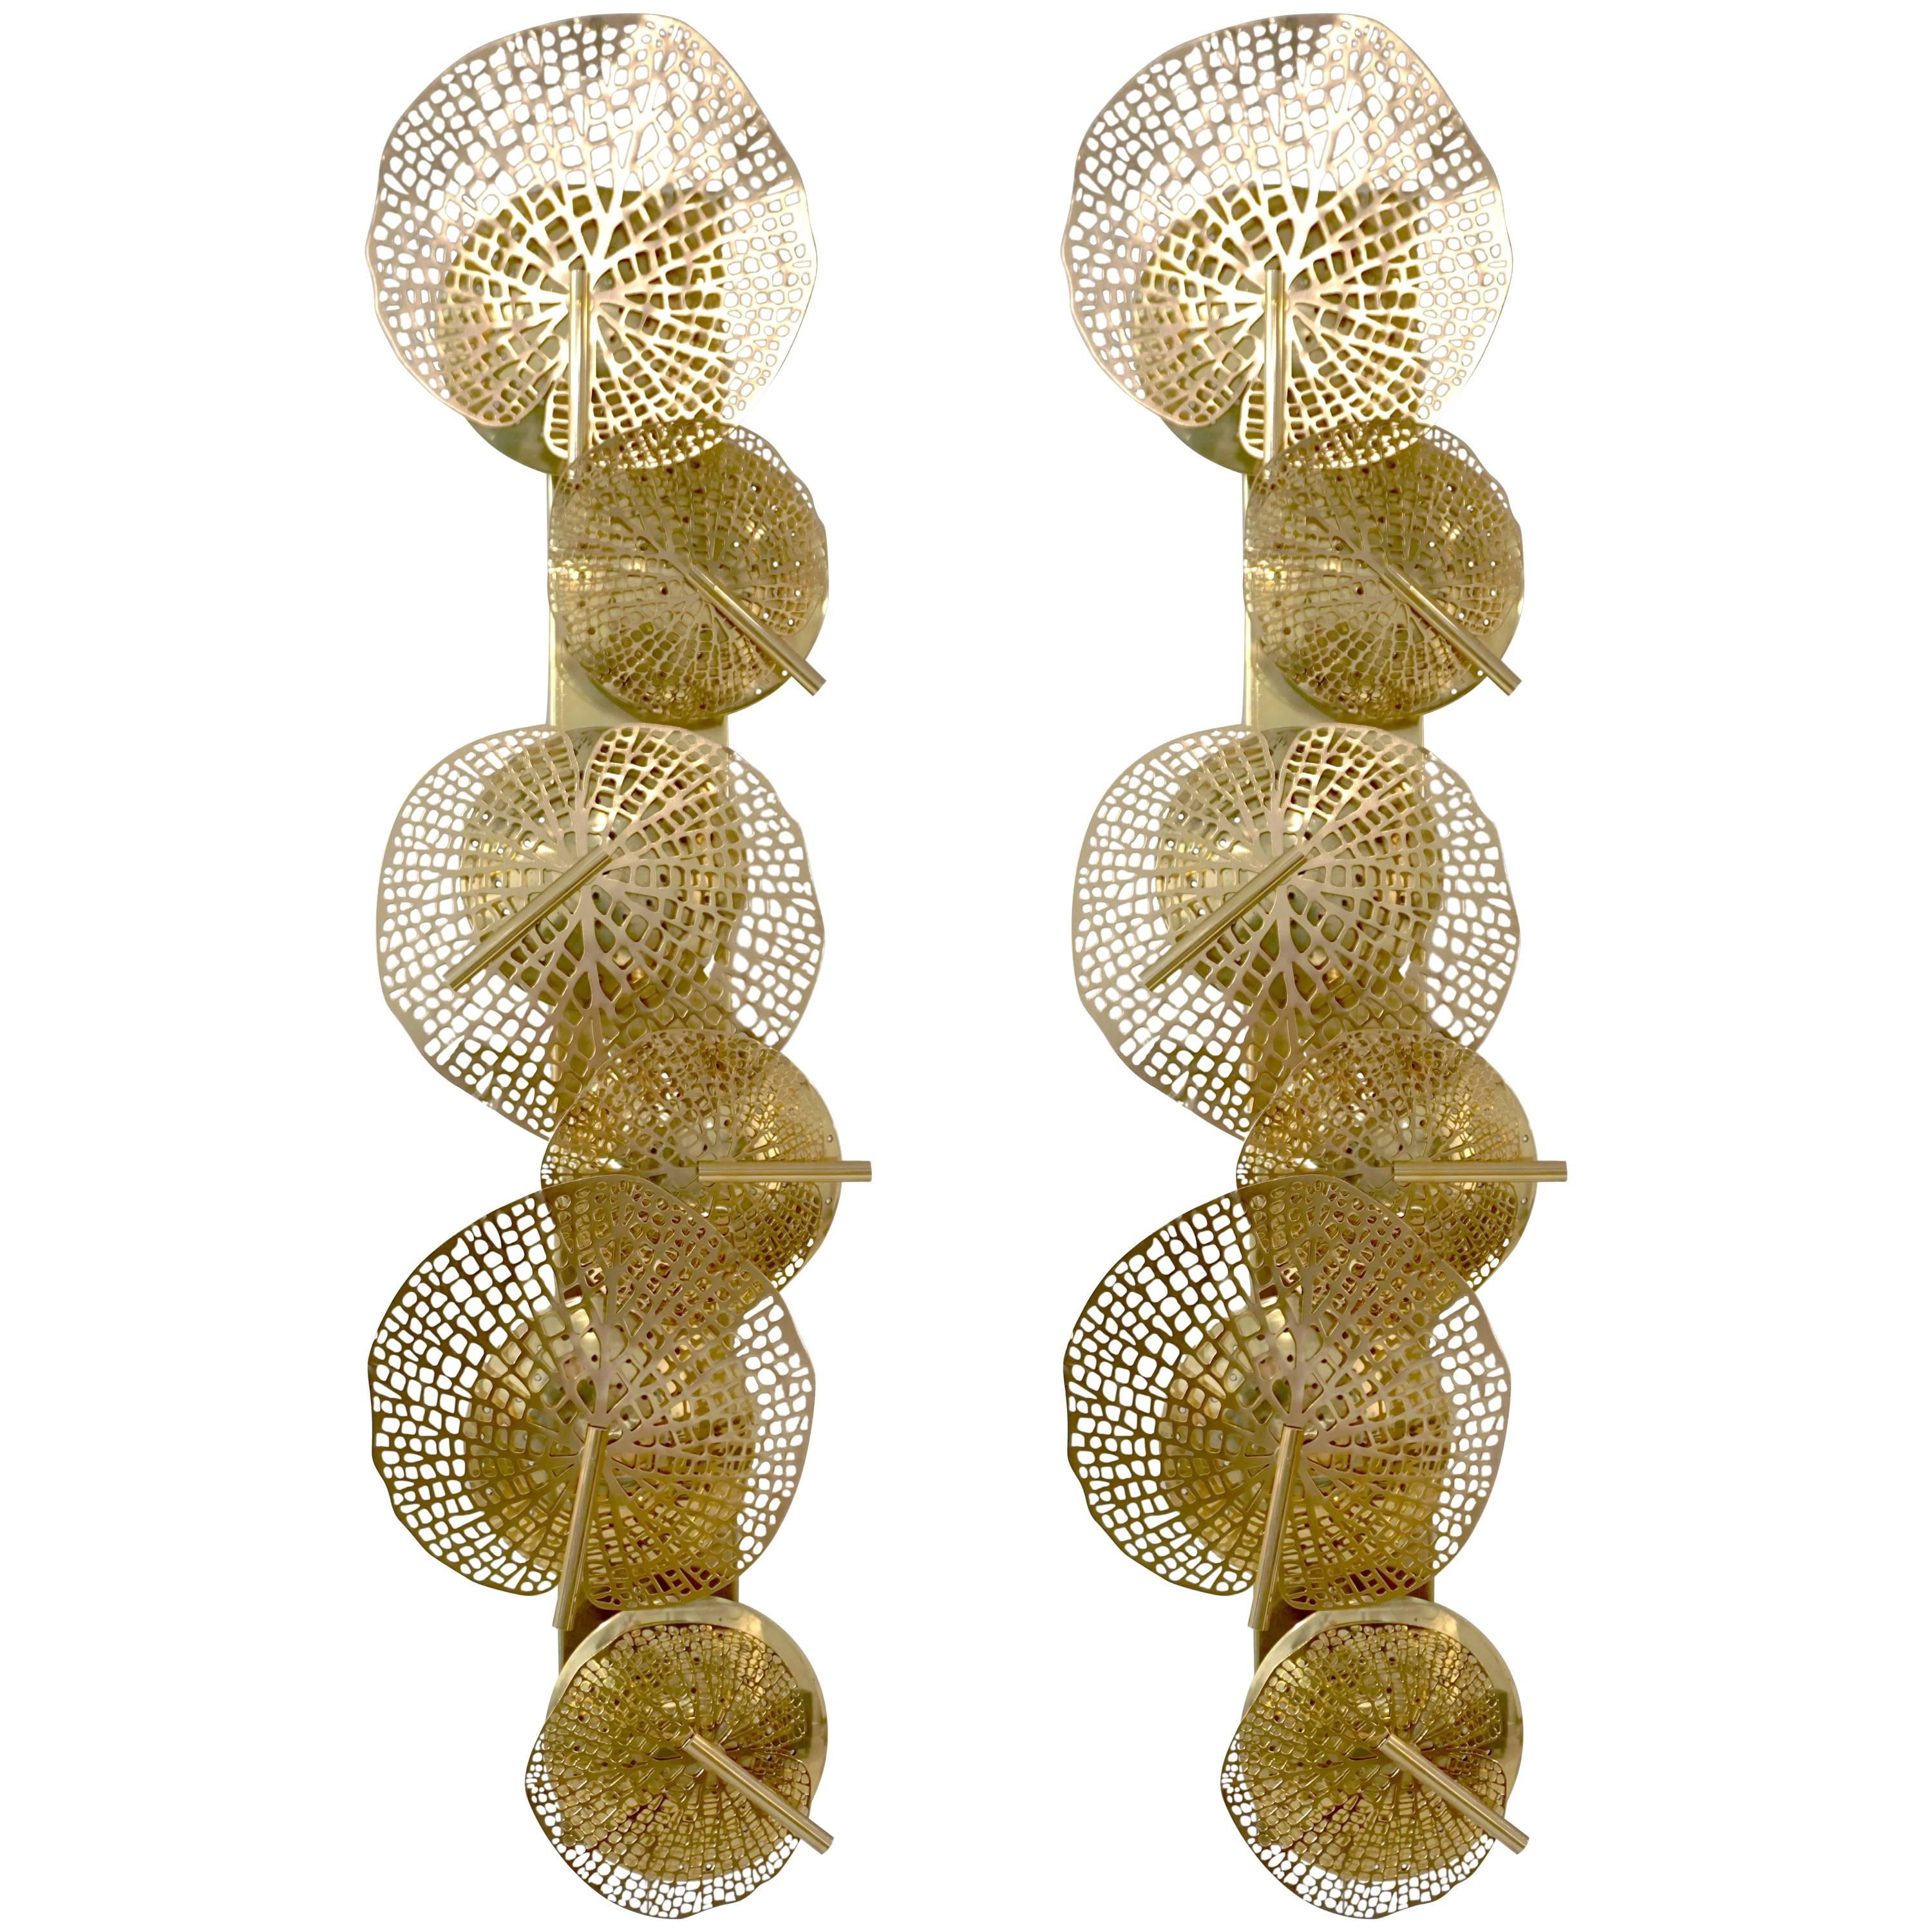 Contemporary Organic Italian Design Pair of Perforated Brass Leaf Sconces